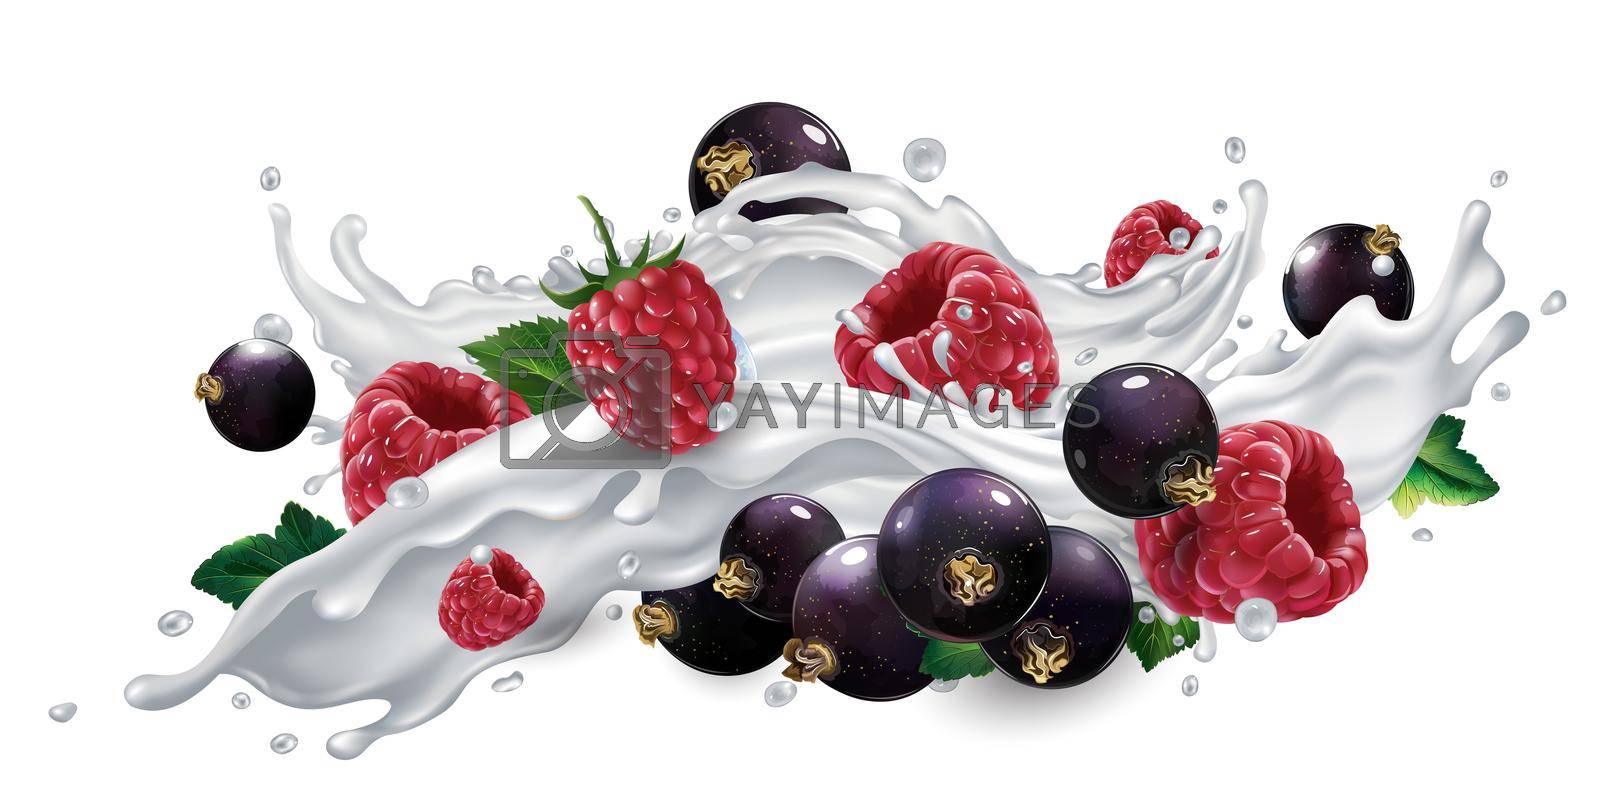 Royalty free image of Black currants and raspberries in a yogurt or milk splash. by ConceptCafe